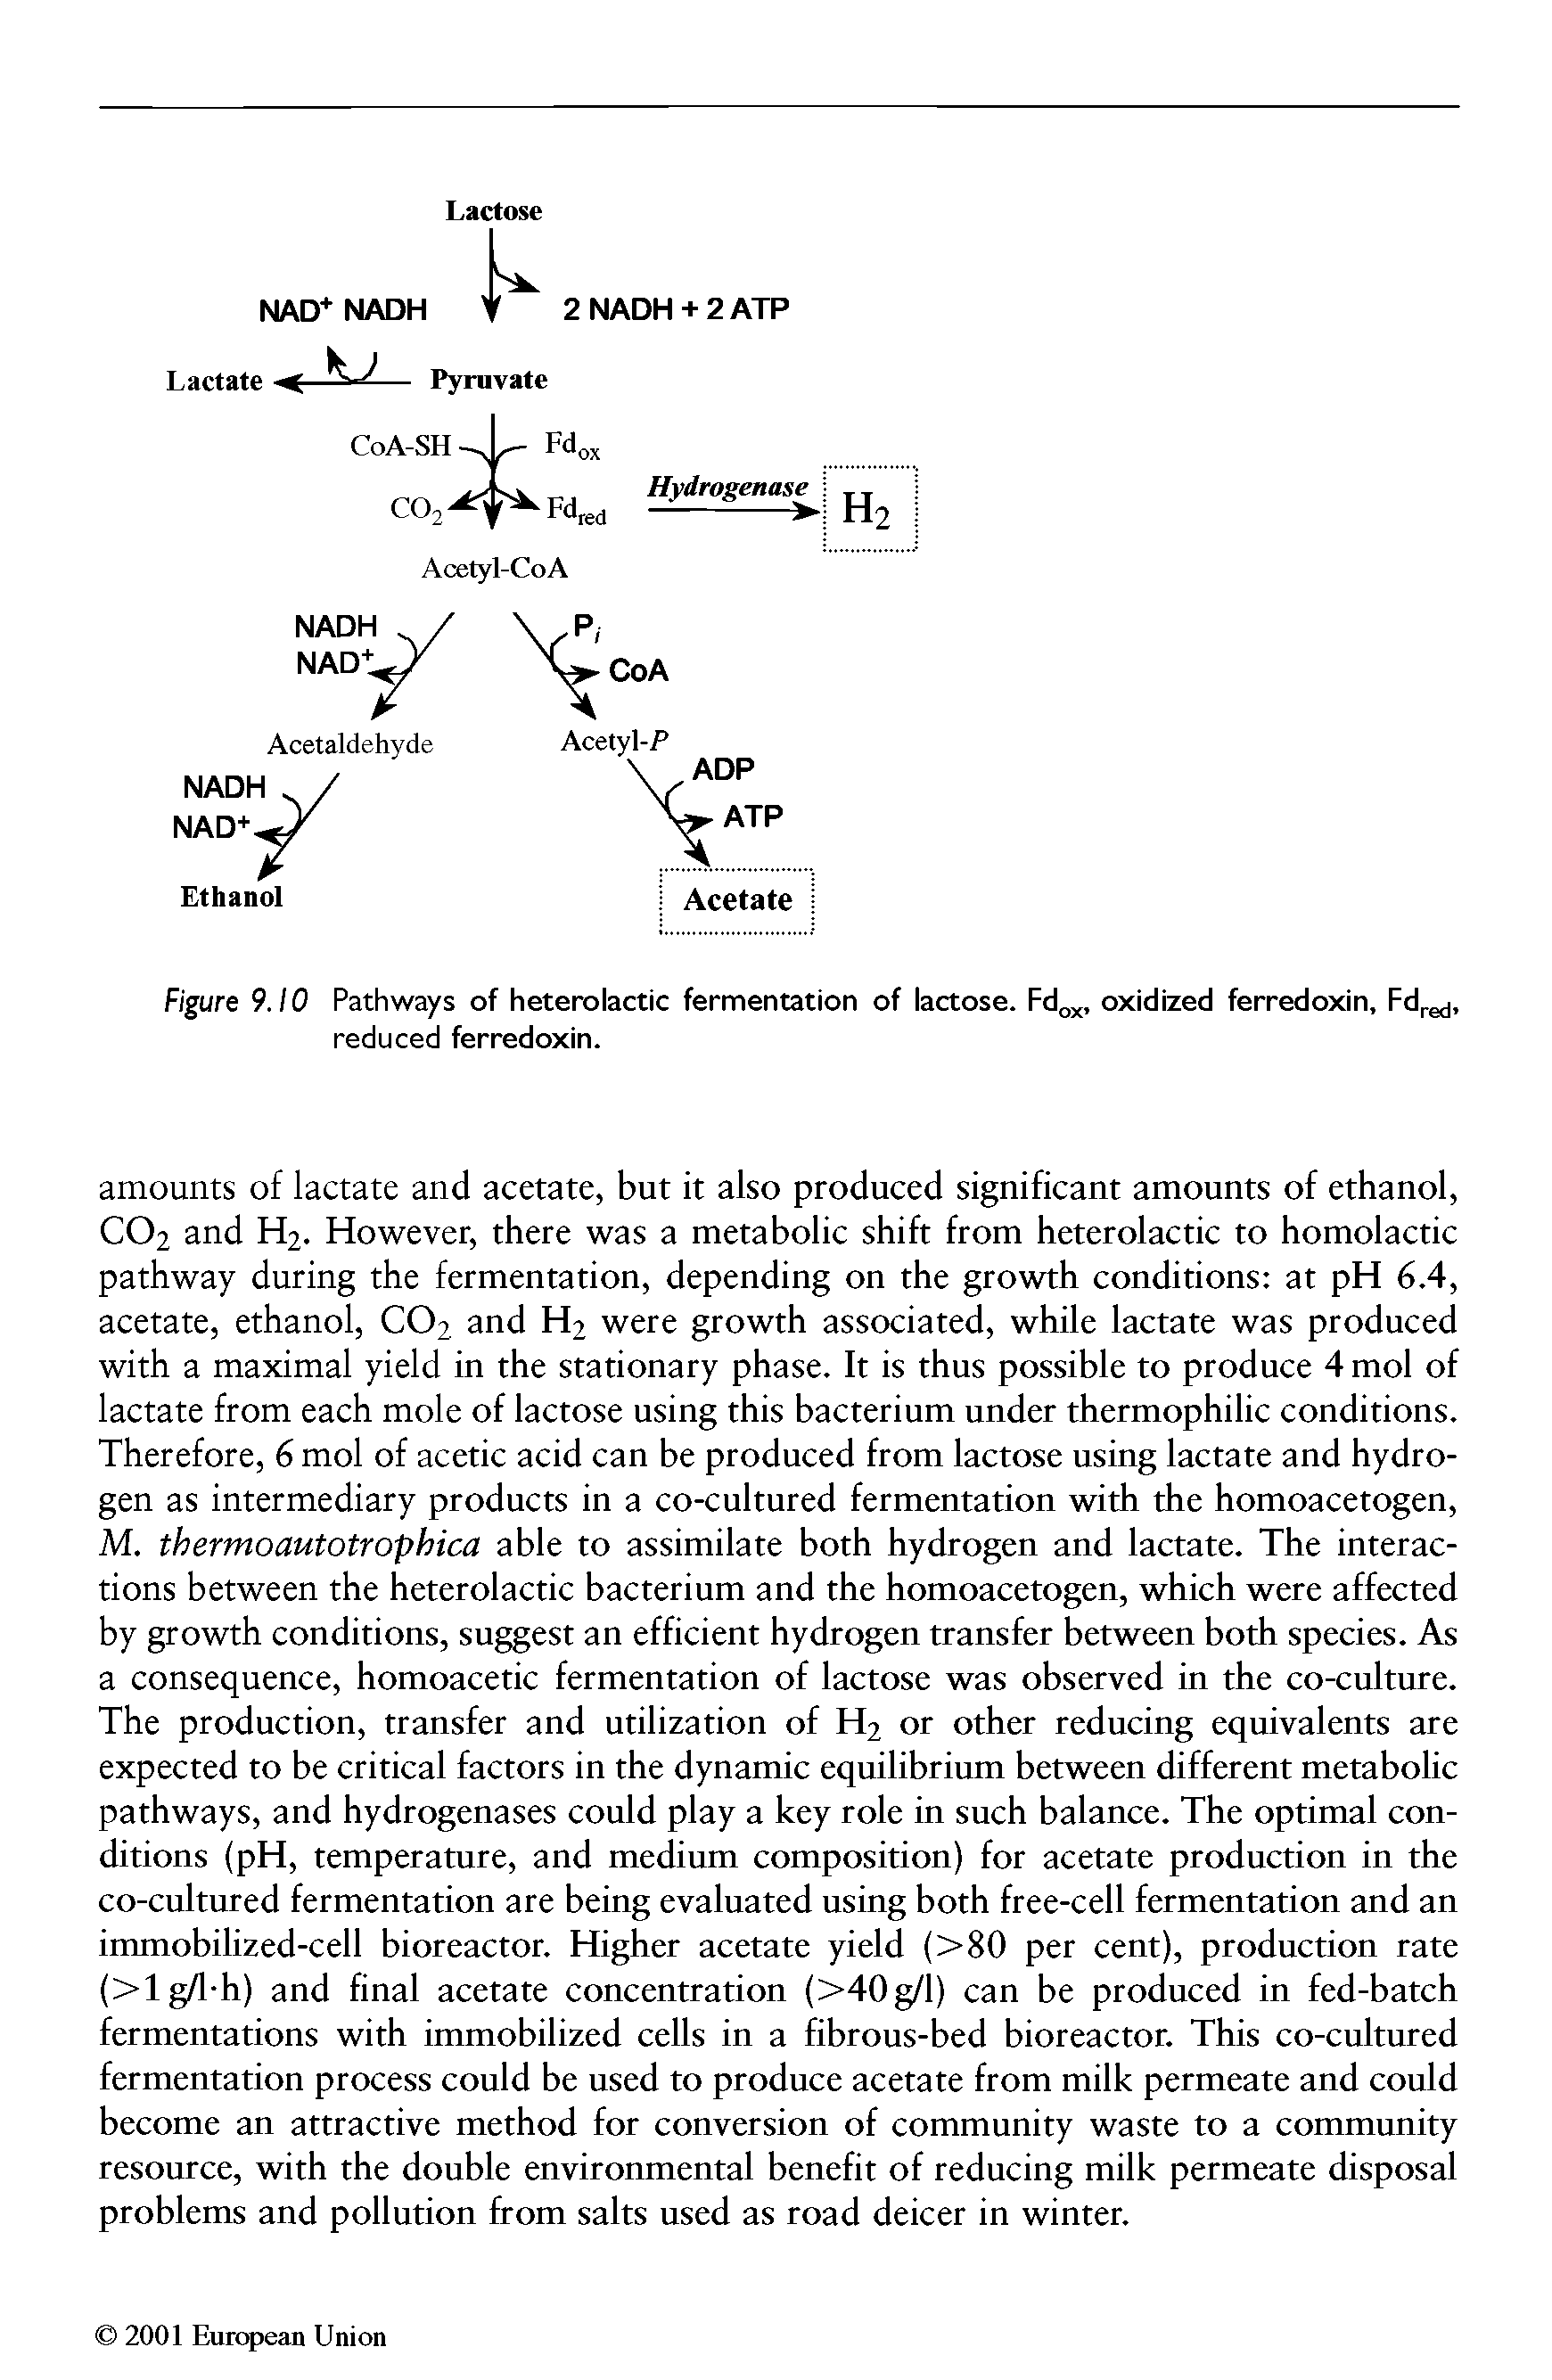 Figure 9.10 Pathways of heterolactic fermentation of lactose. Fd, oxidized ferredoxin, Fd gj, reduced ferredoxin.